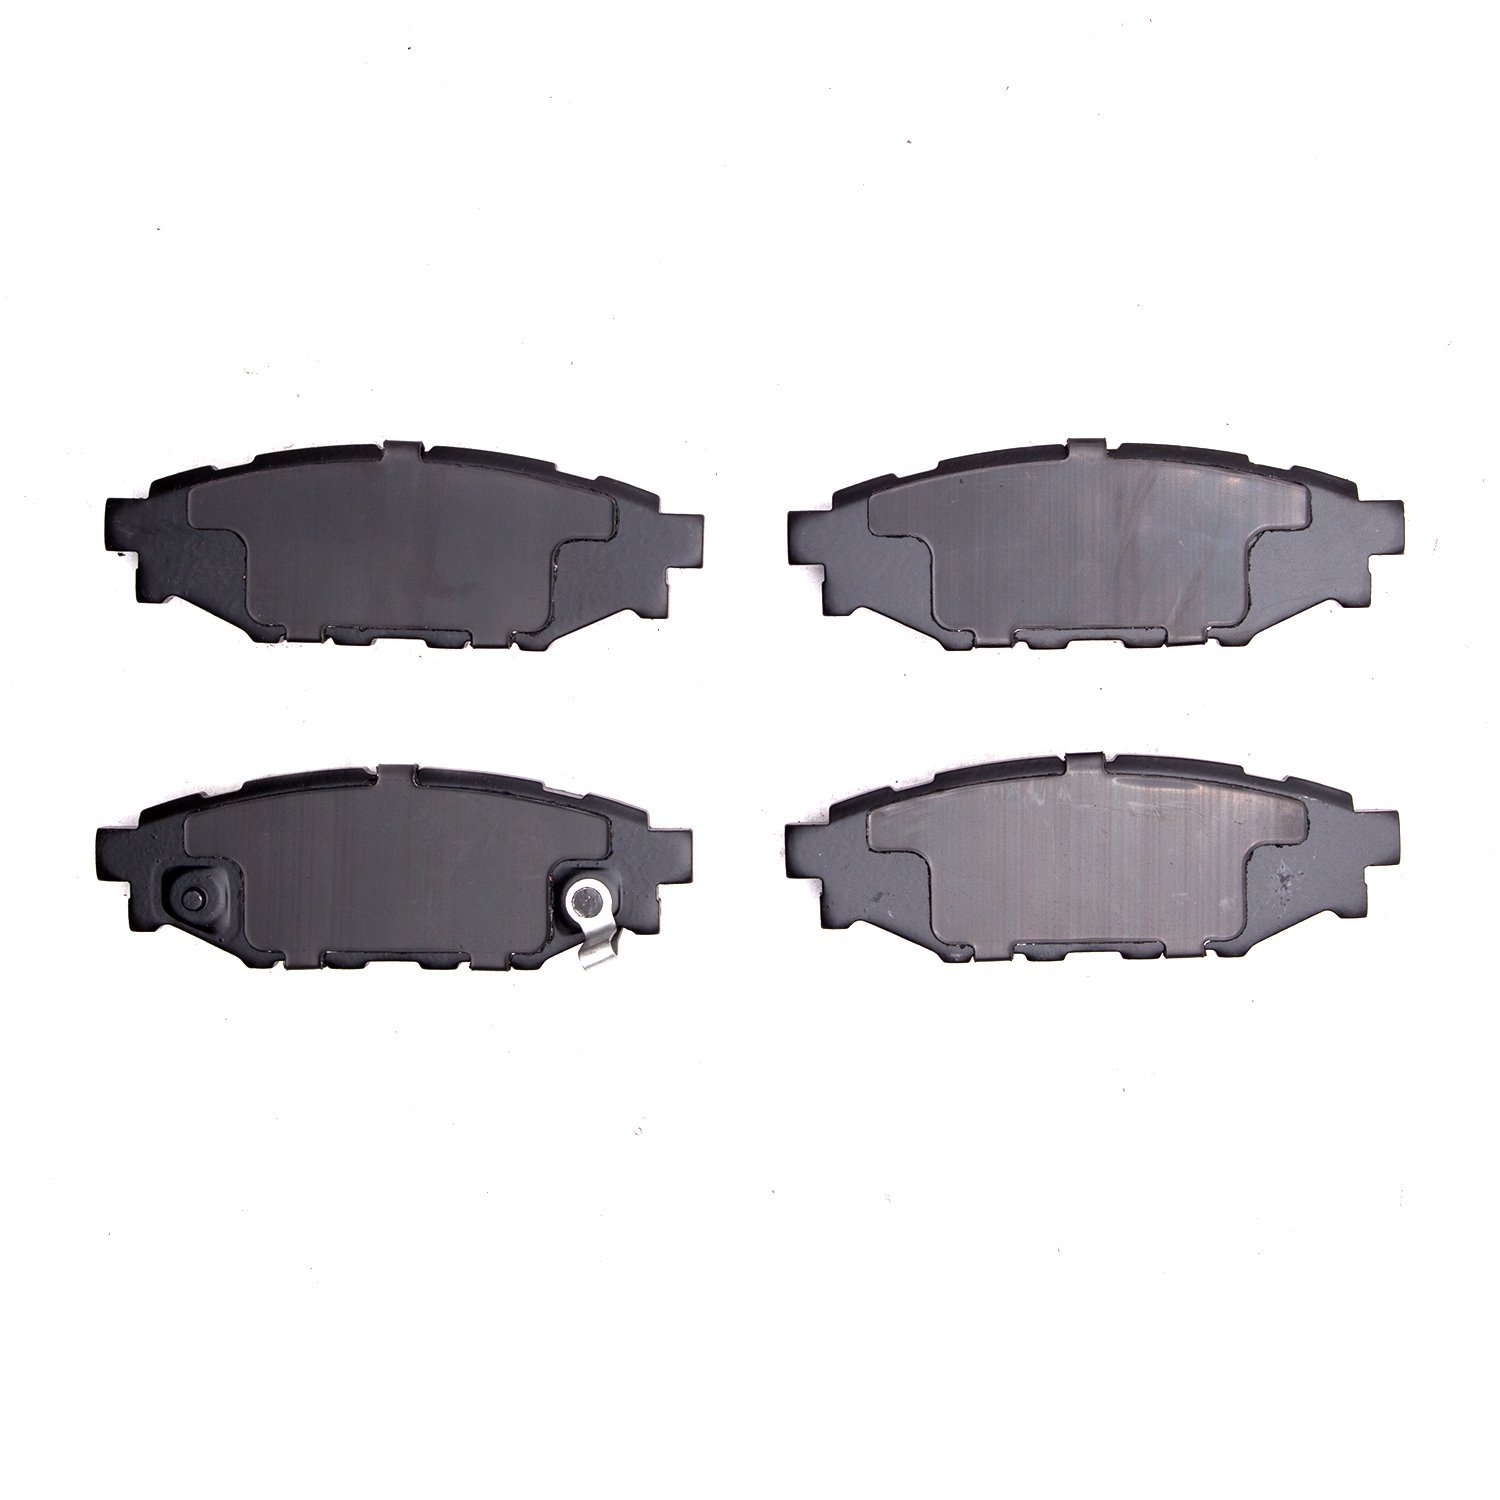 1551-1114-00 5000 Advanced Ceramic Brake Pads, Fits Select Subaru, Position: Rear